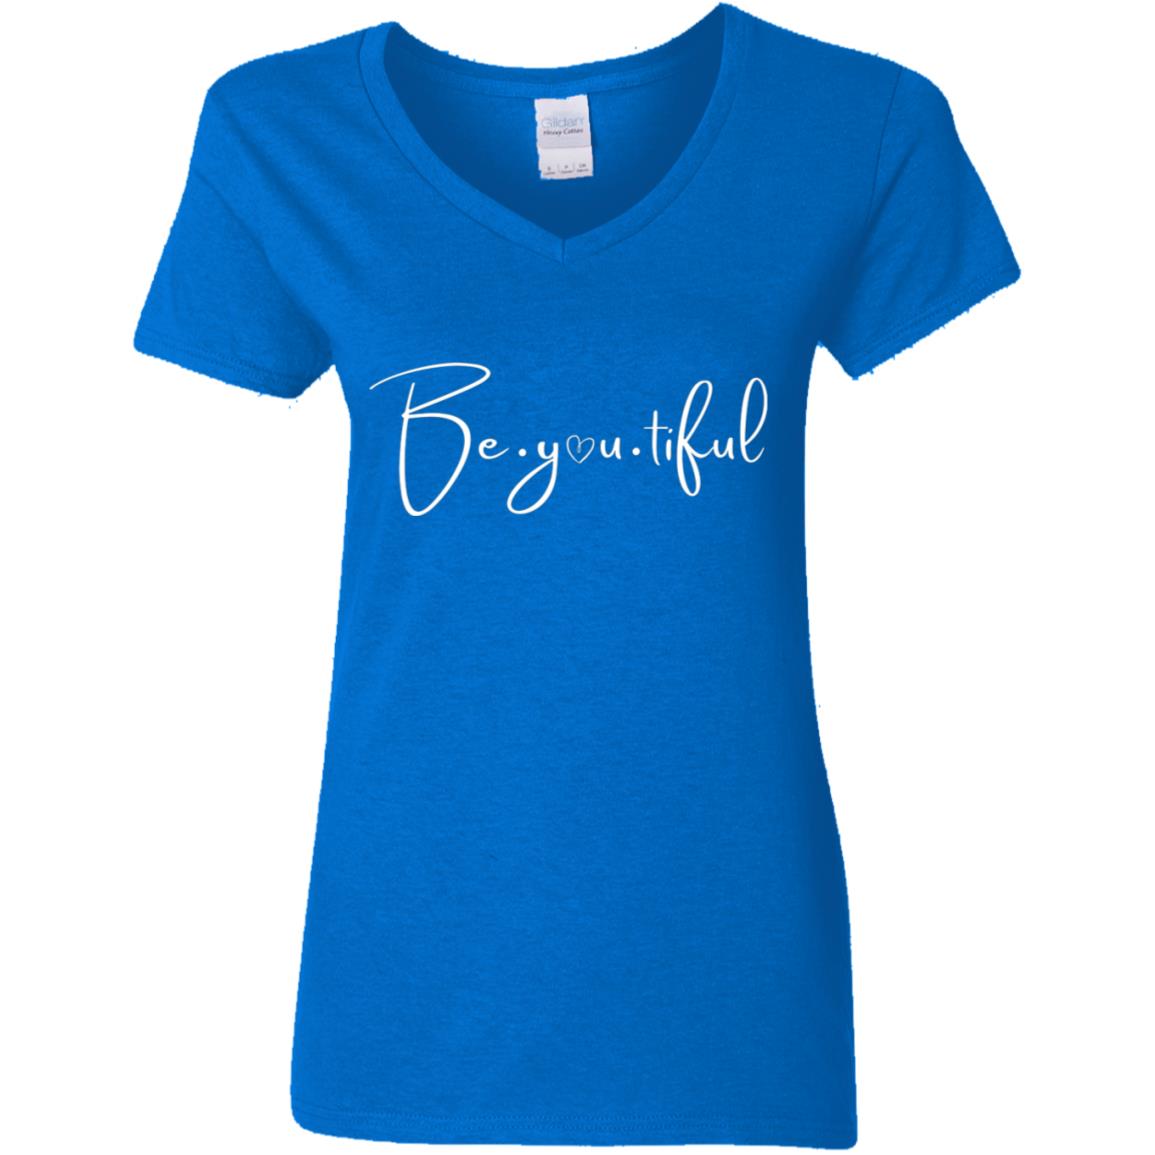 Beyoutiful V-Neck T-Shirt - royal blue - white lettering